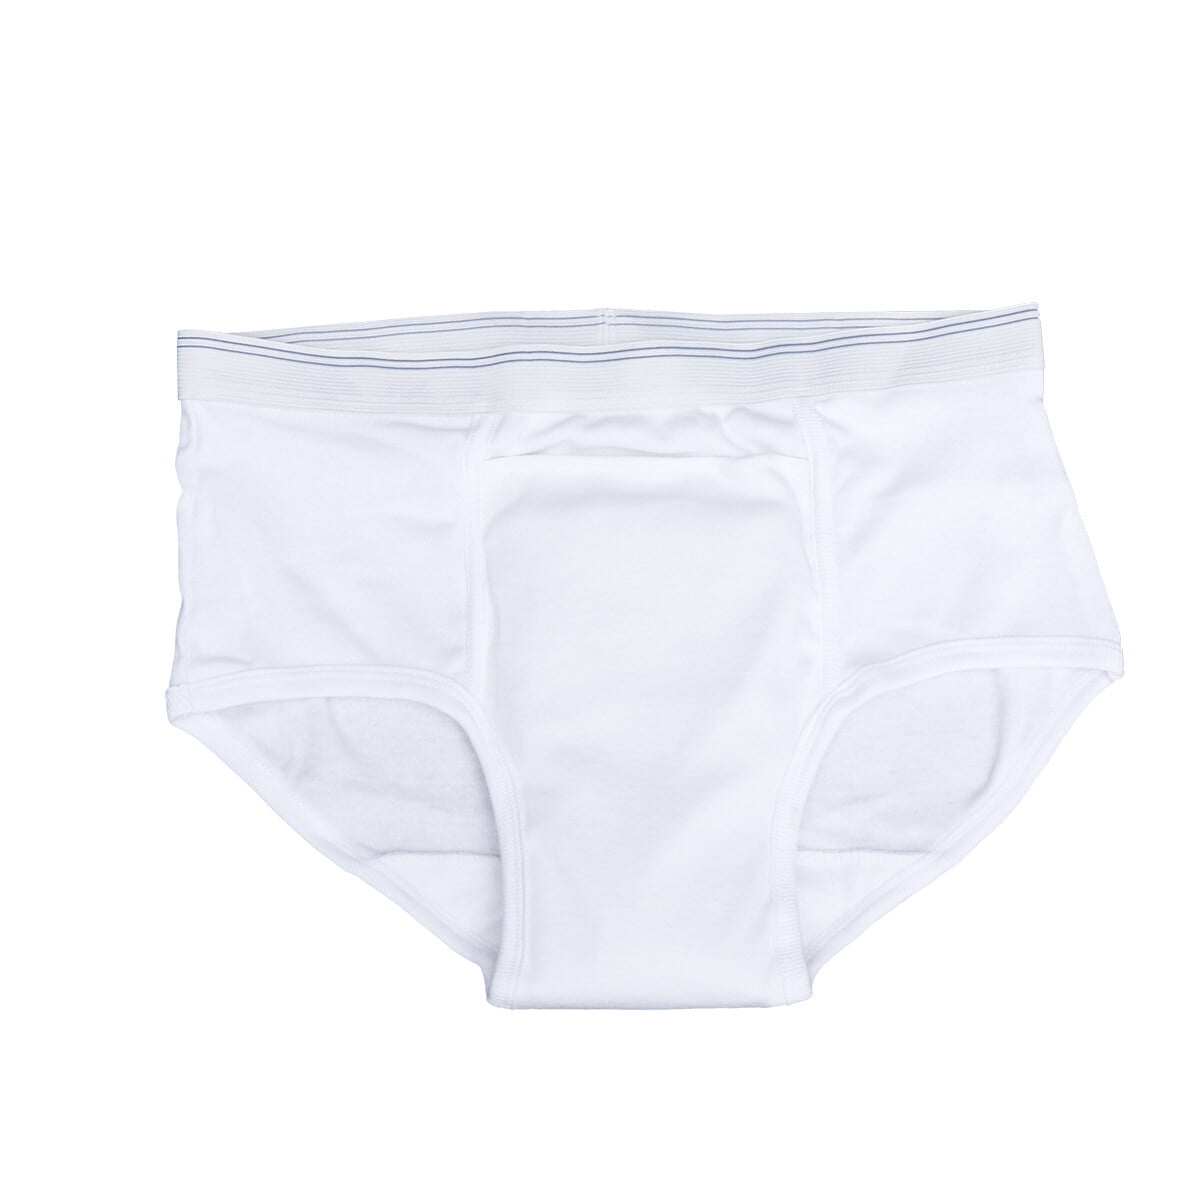 Prevail Disposable Underwear Medium, PF-512, Extra, 20 Ct